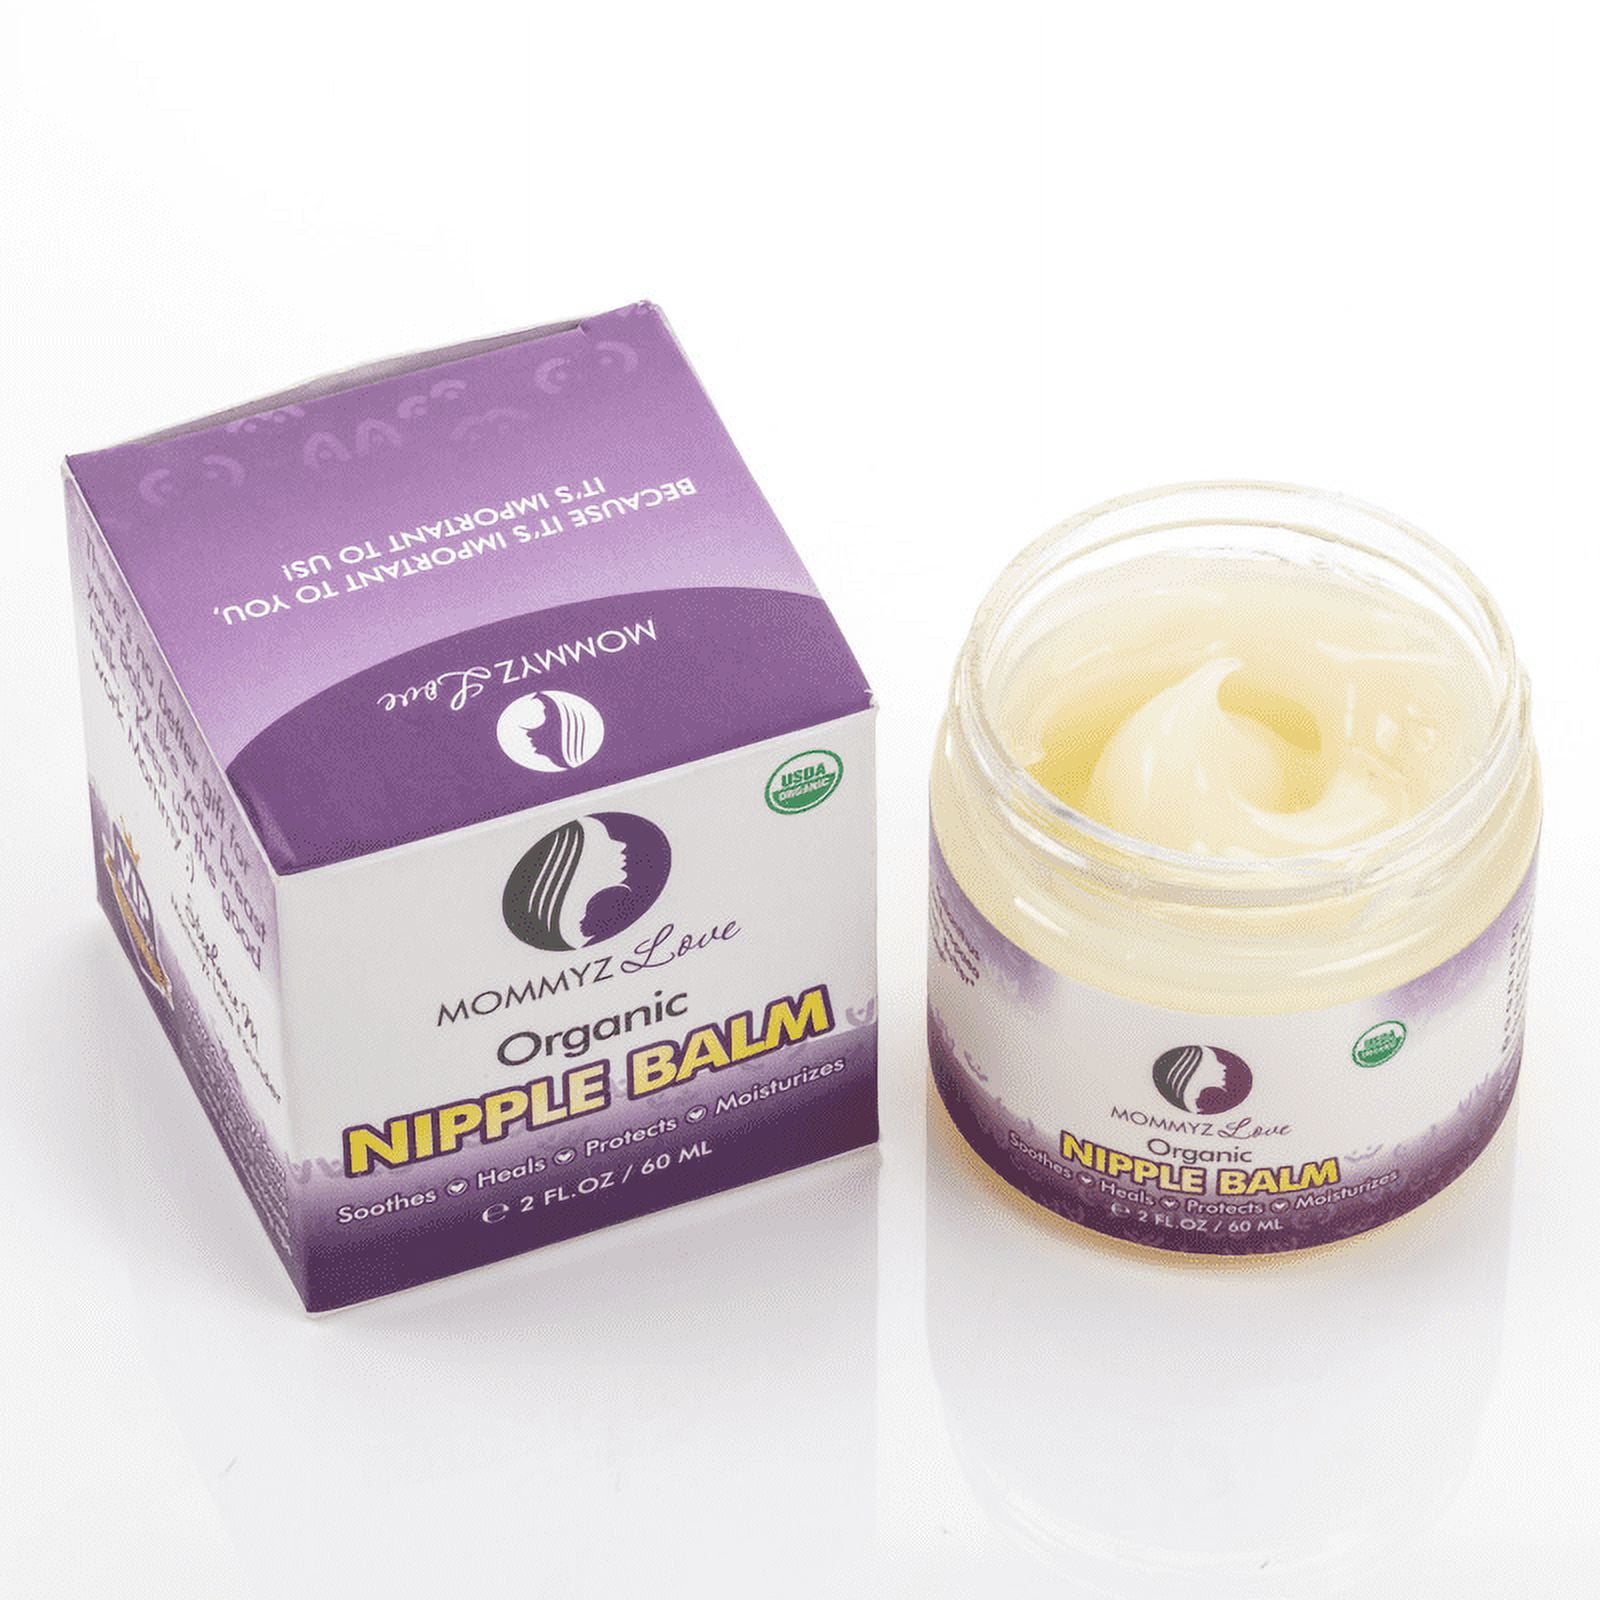 Motherlove Nipple Cream Organic 1 oz/29.5 ml EXP 09/2024